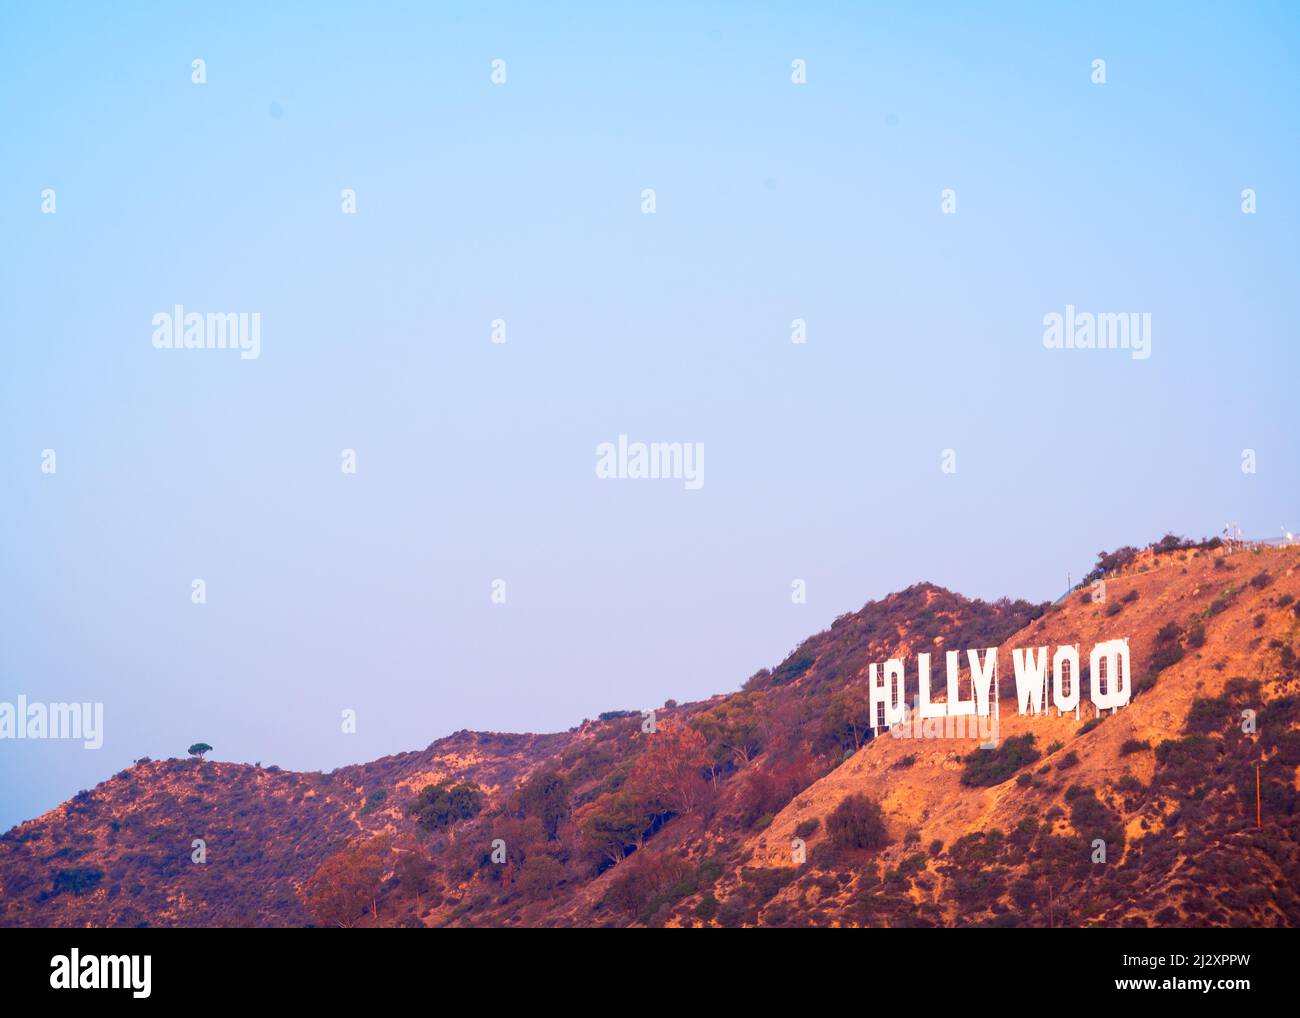 LOS ANGELES, KALIFORNIEN - 11. NOVEMBER 2013: Hollywood-Schild in Los Angeles, Kalifornien. Das Wahrzeichen-Schild stammt aus dem Jahr 1923. Stockfoto